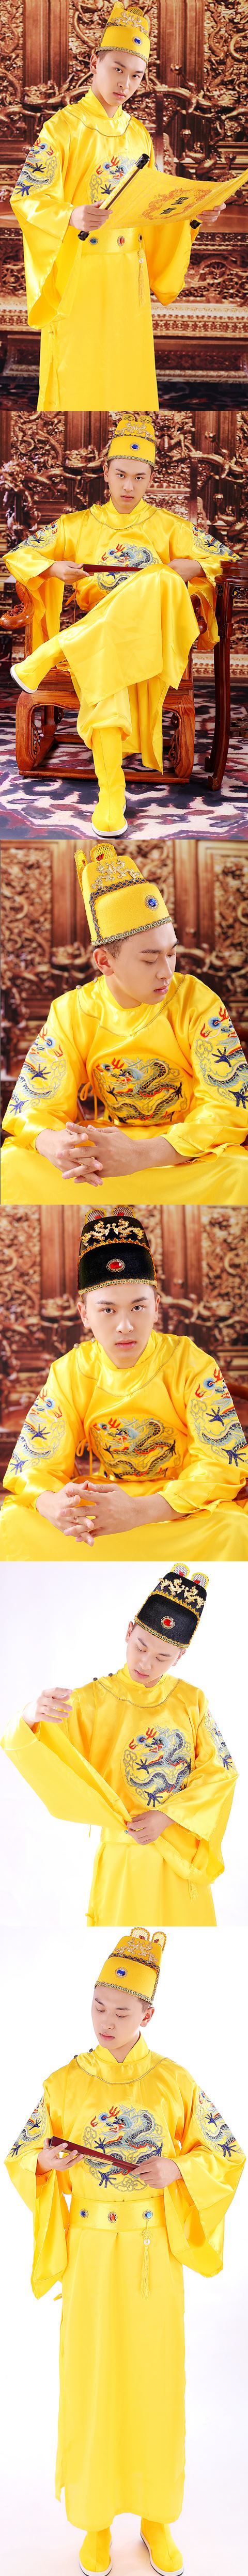 Ming Emperor Dress w/ Dragon Hat (RM)